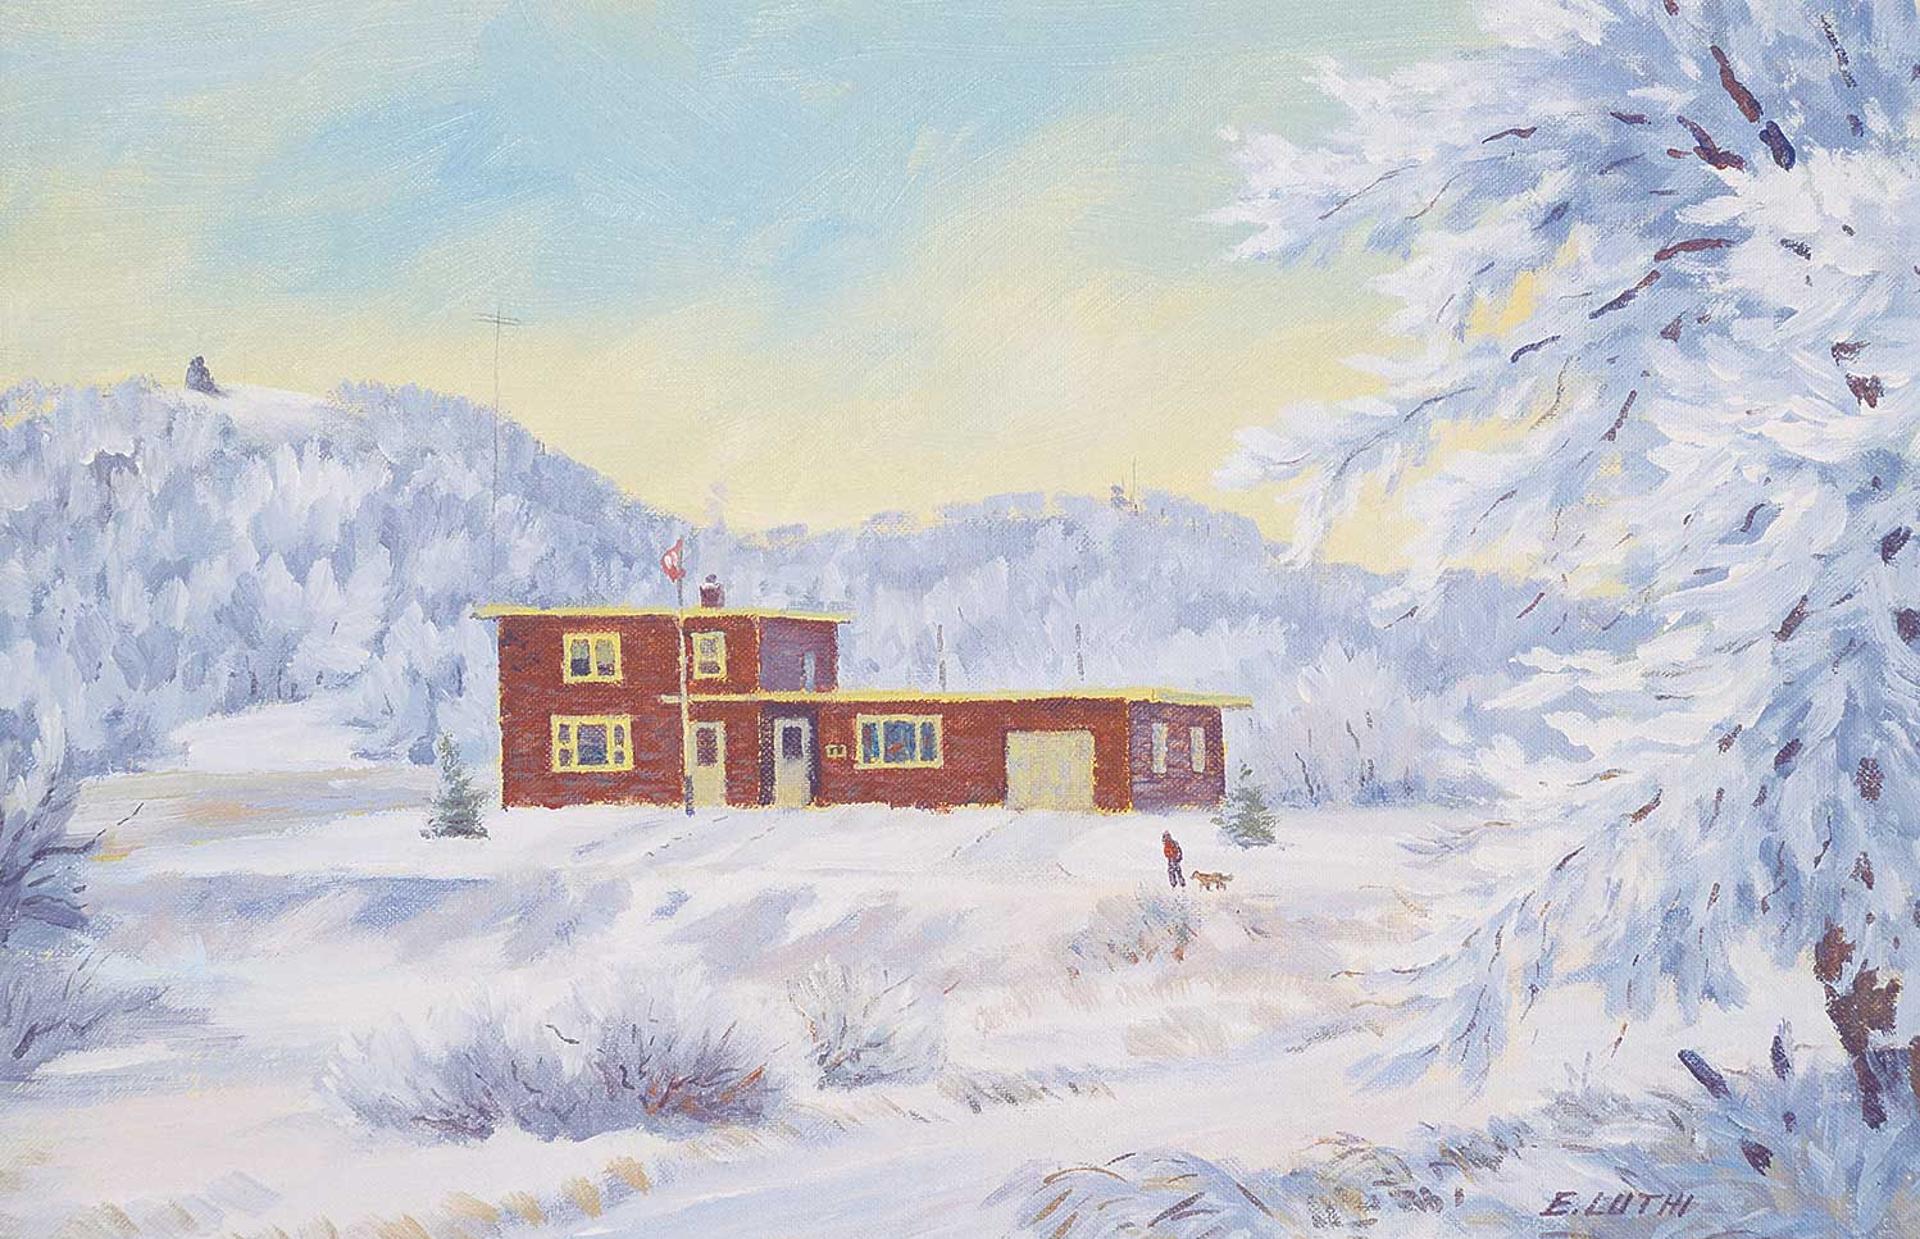 Ernest (Ernie) Luthi (1906-1983) - Winter Hoar Frost